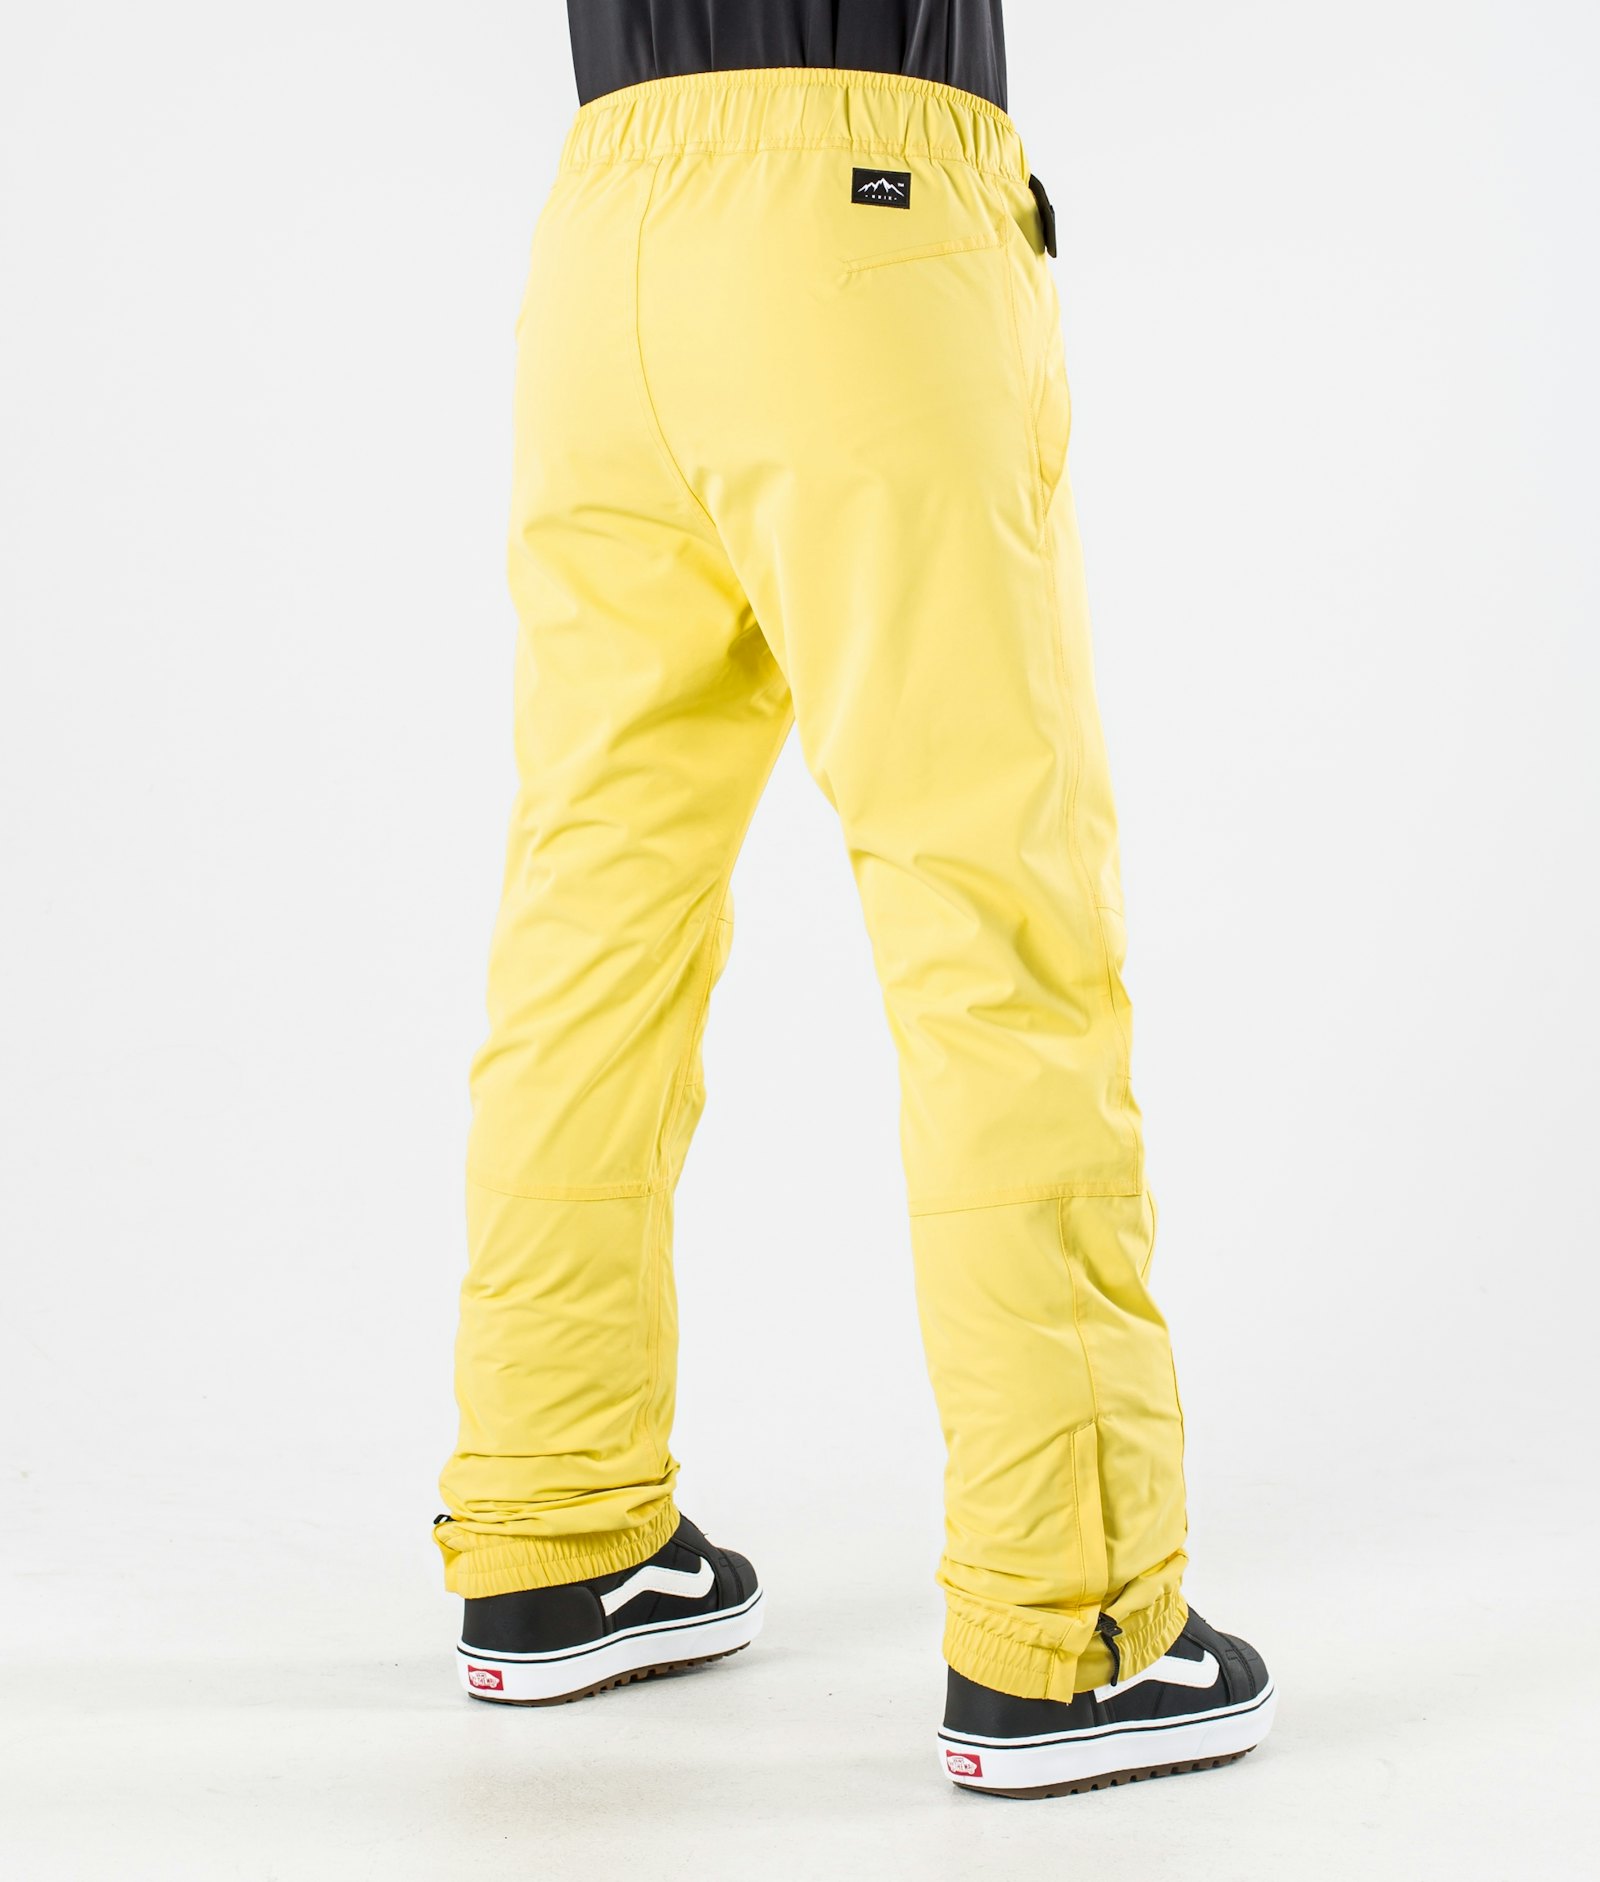 Blizzard W 2020 Snowboardhose Damen Faded Yellow